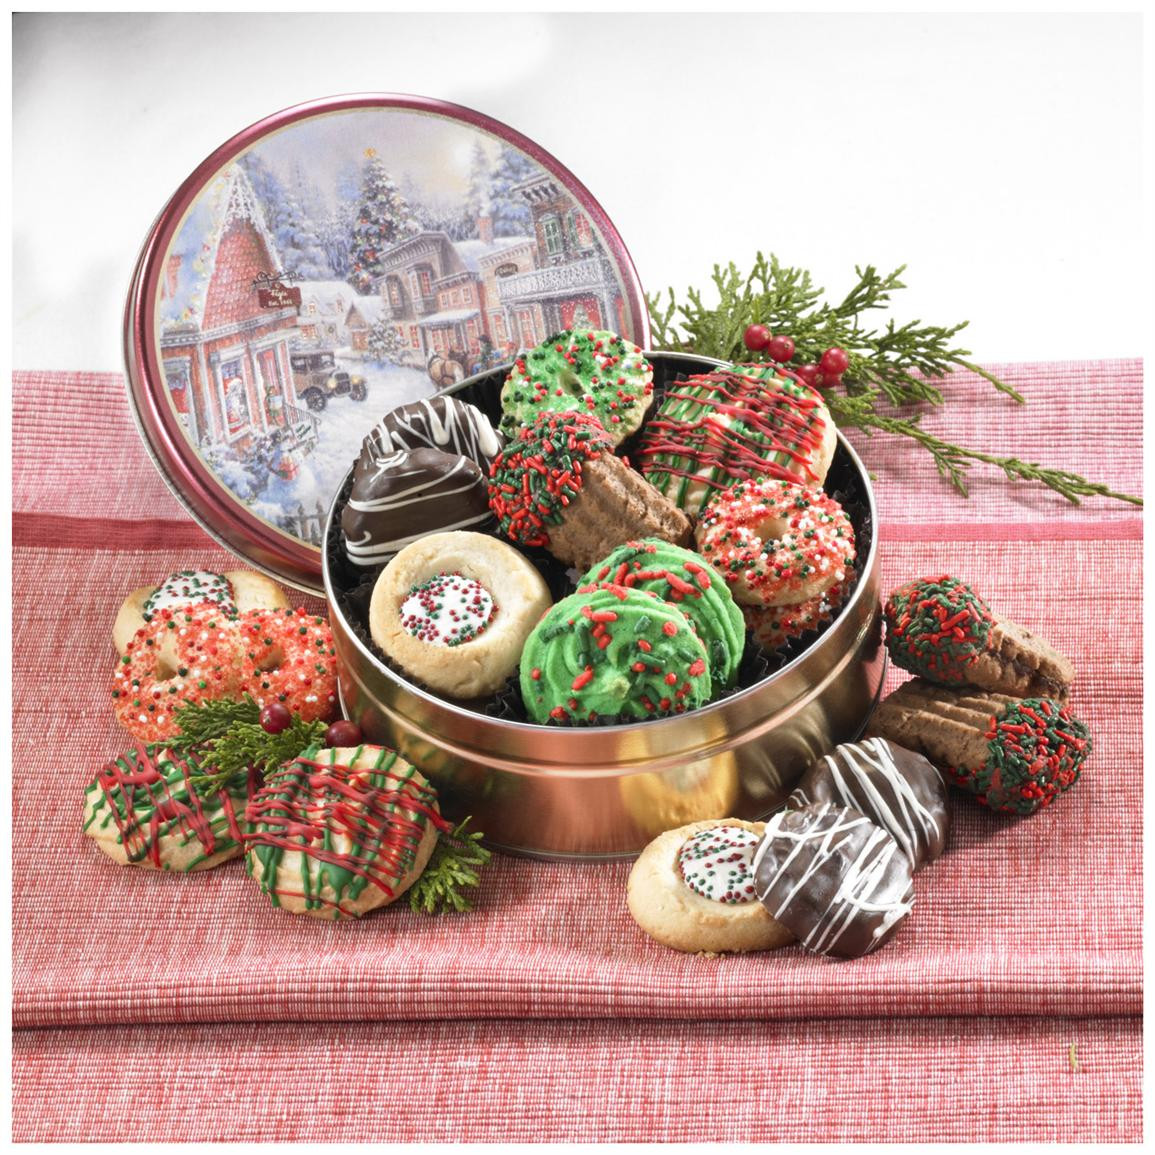 Fancy Christmas Cookies
 Figi s Fancy Holiday Cookies Food Gifts at